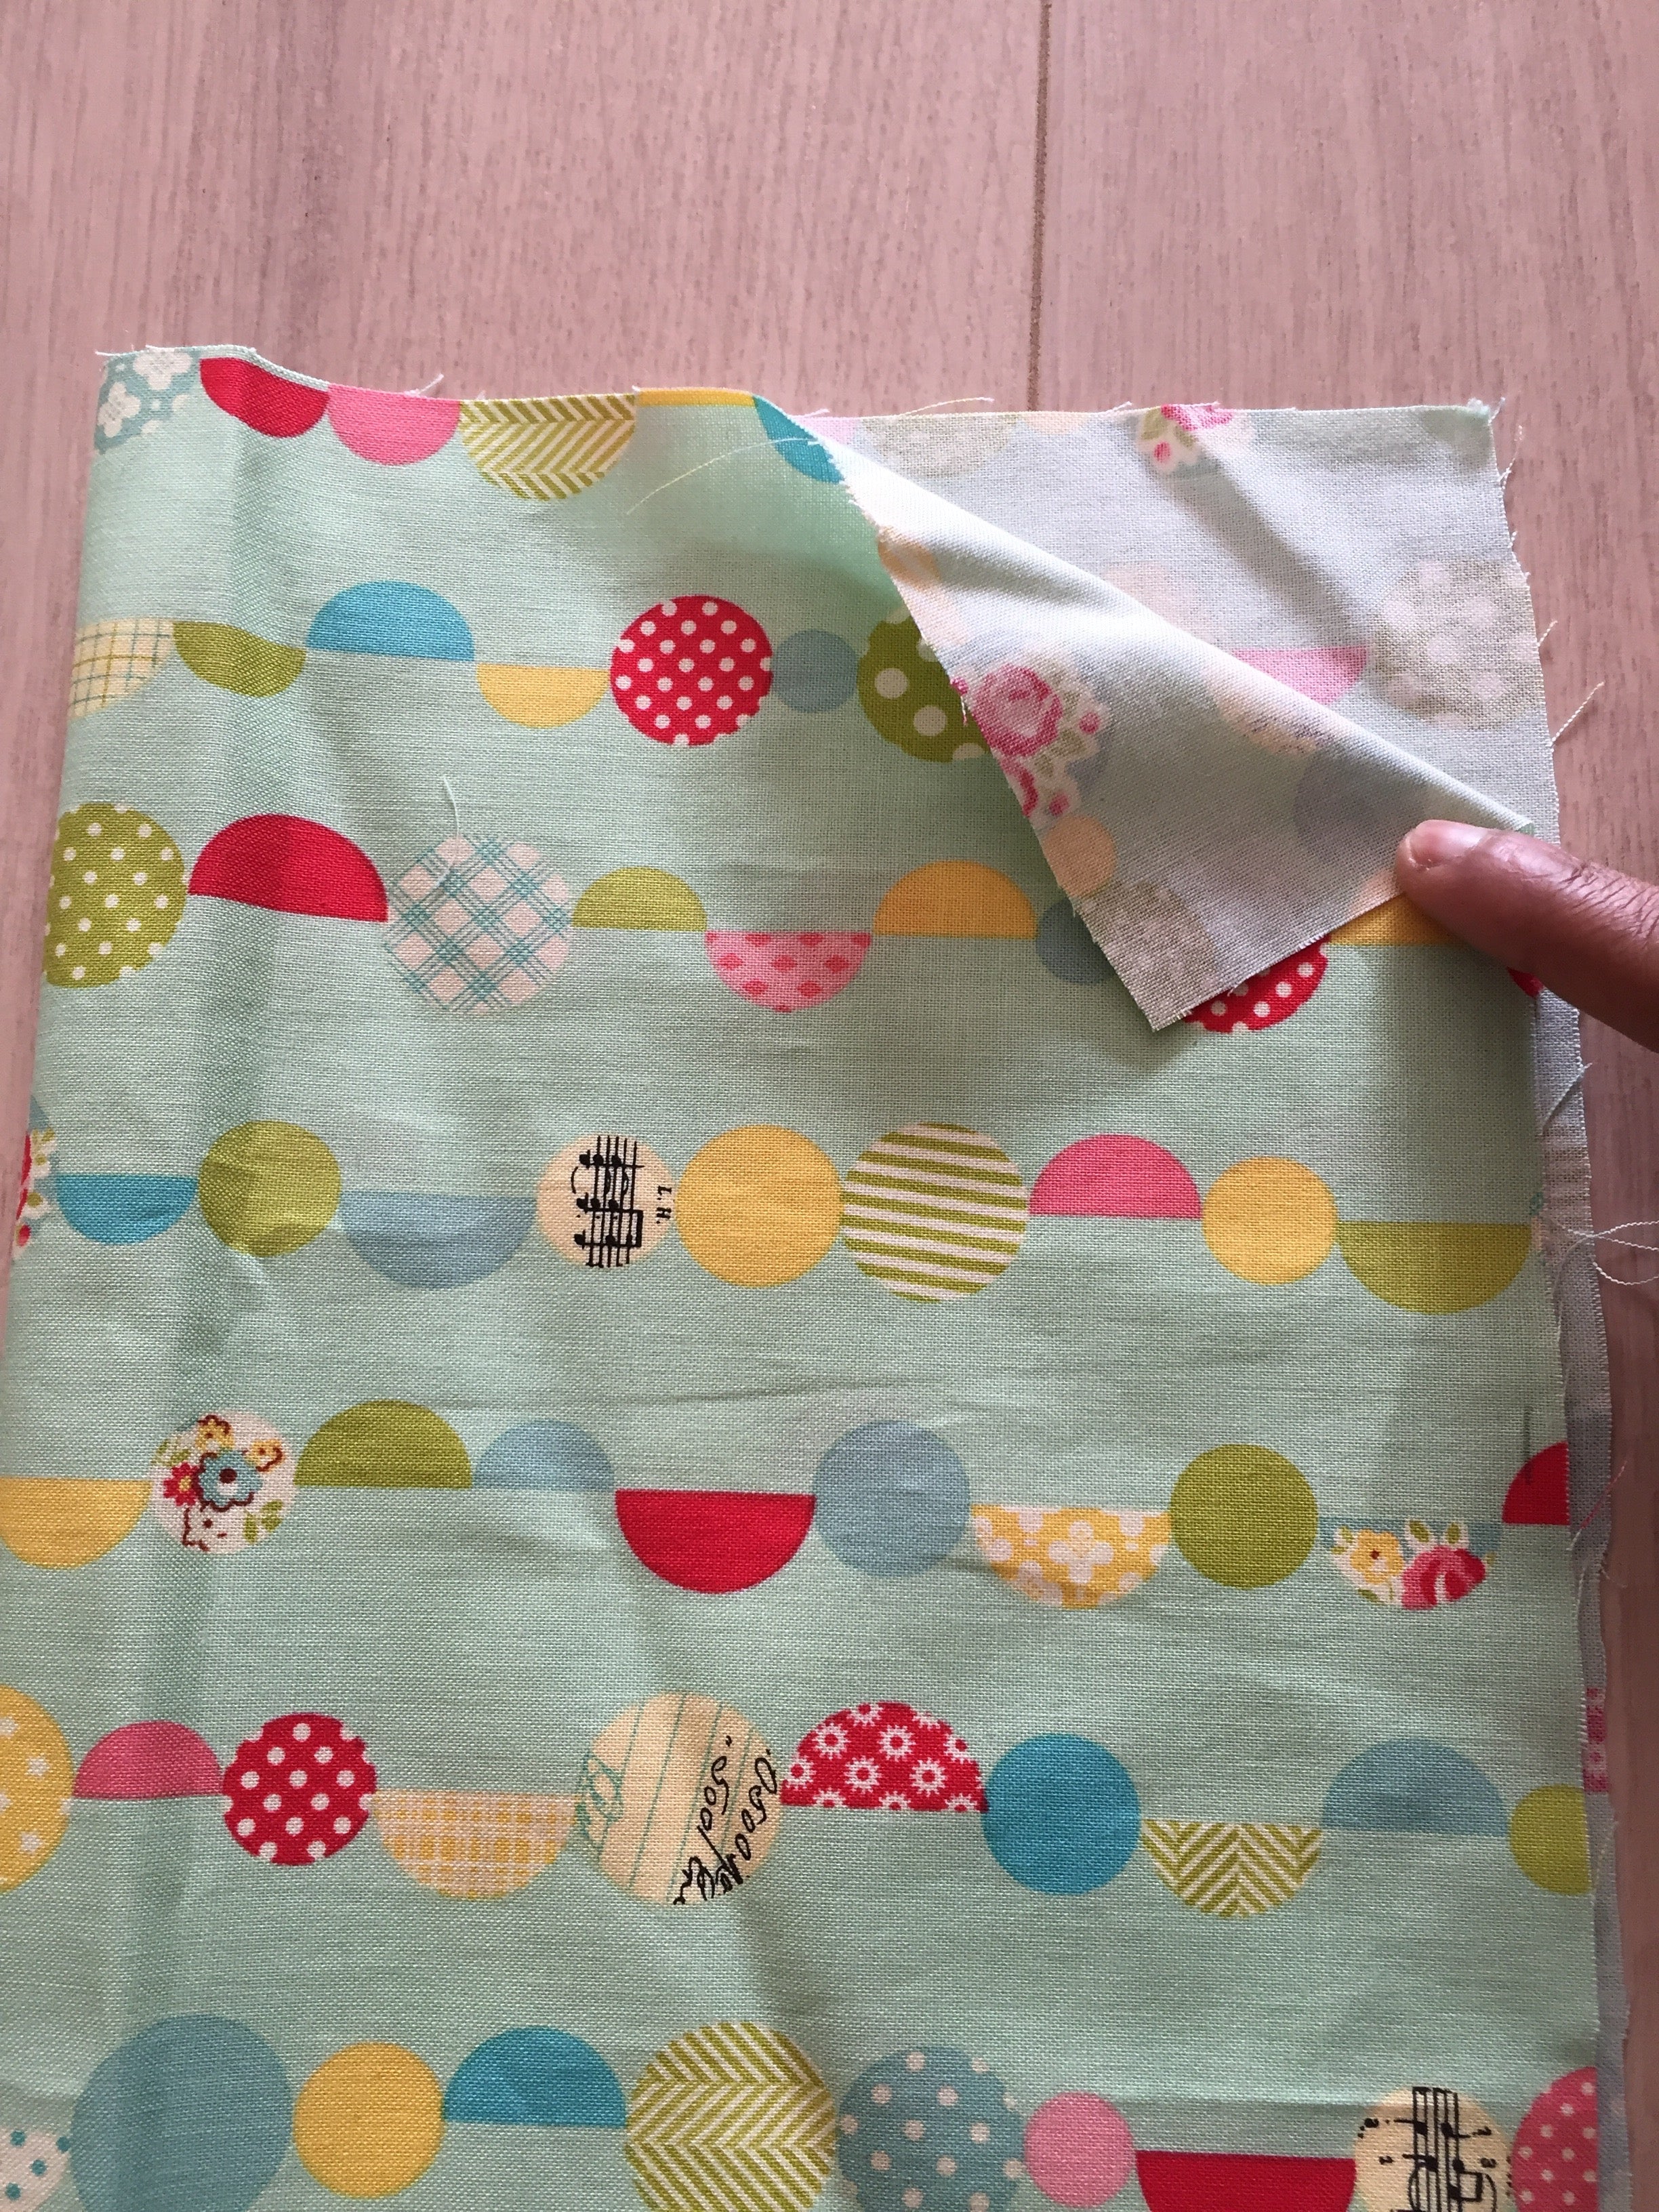 Sewing Tucks: A New Way to Gather – Bella Sunshine Designs